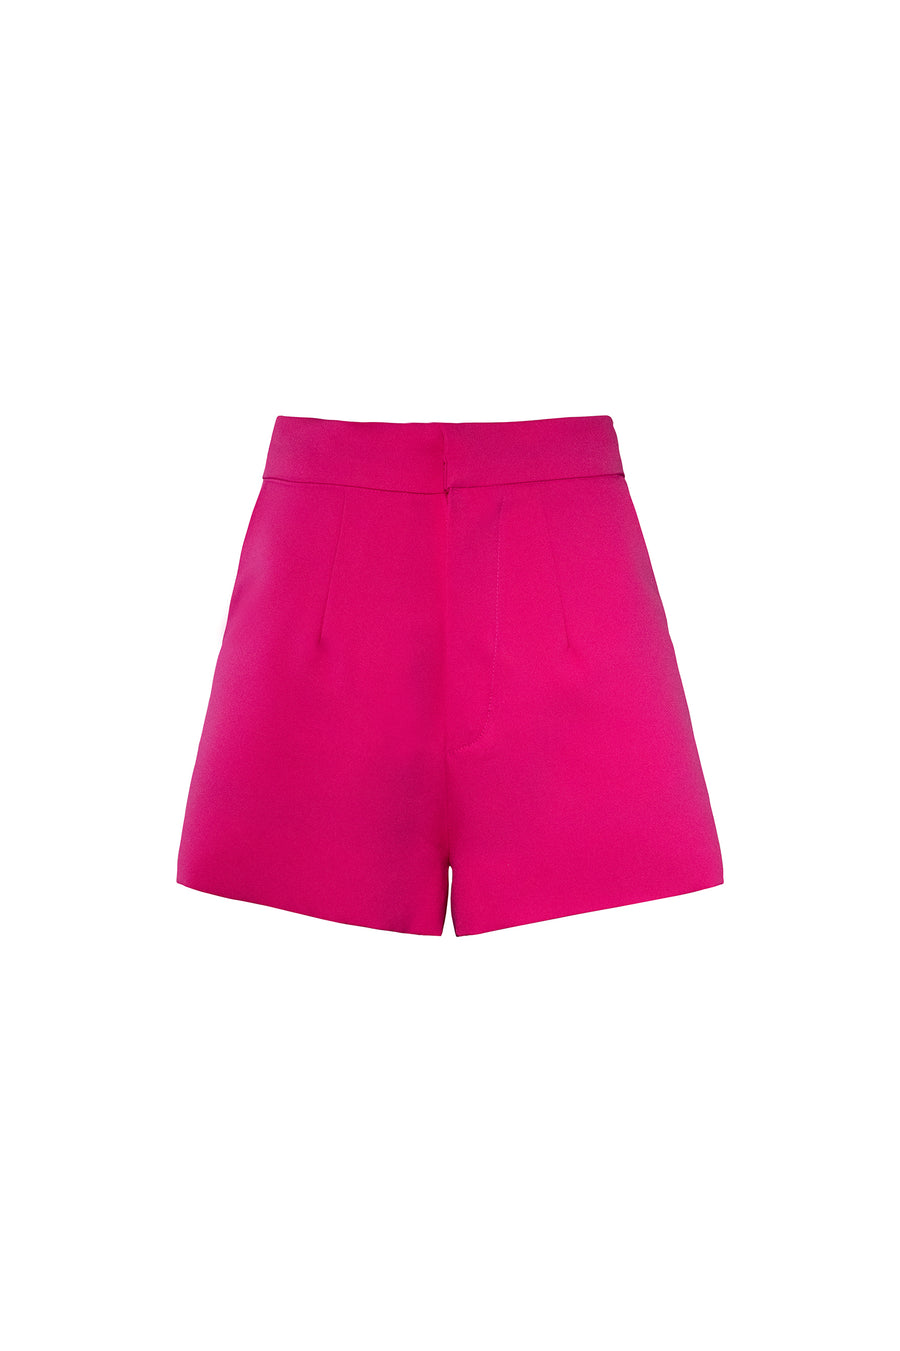 Hot Pink Crop Top / Hot Pink Shorts